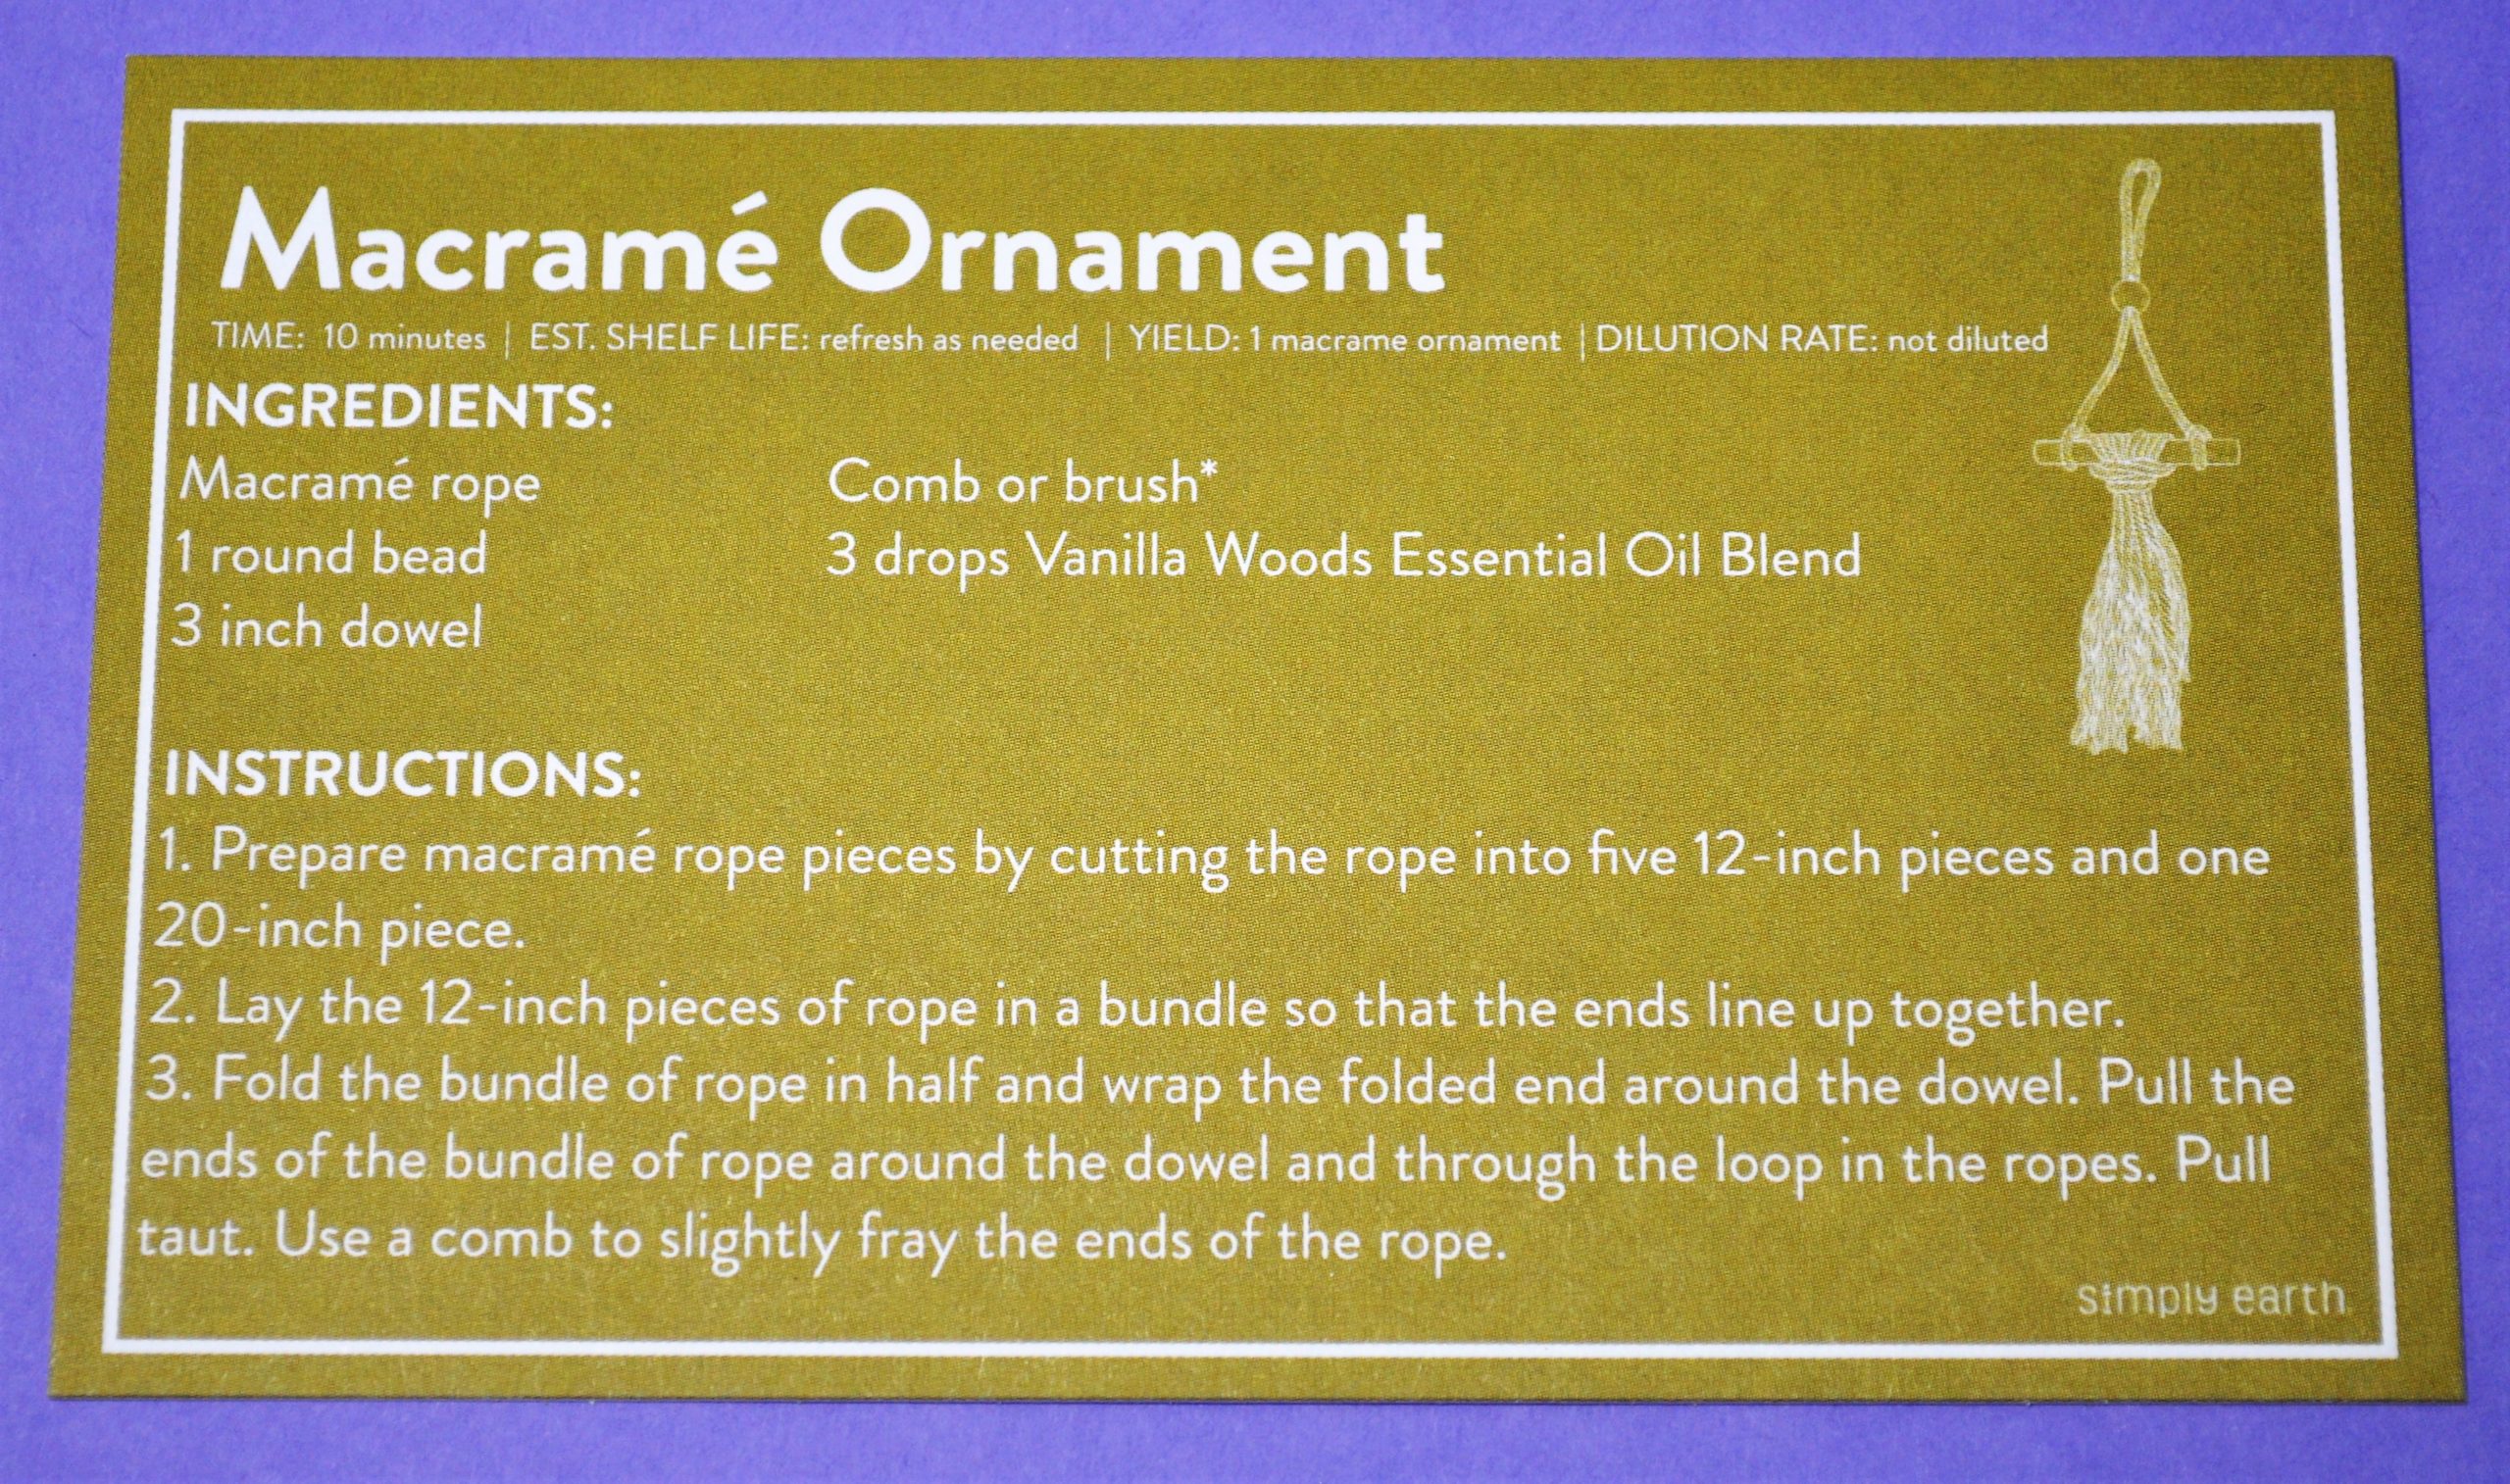 Macramé Ornament Recipe Card